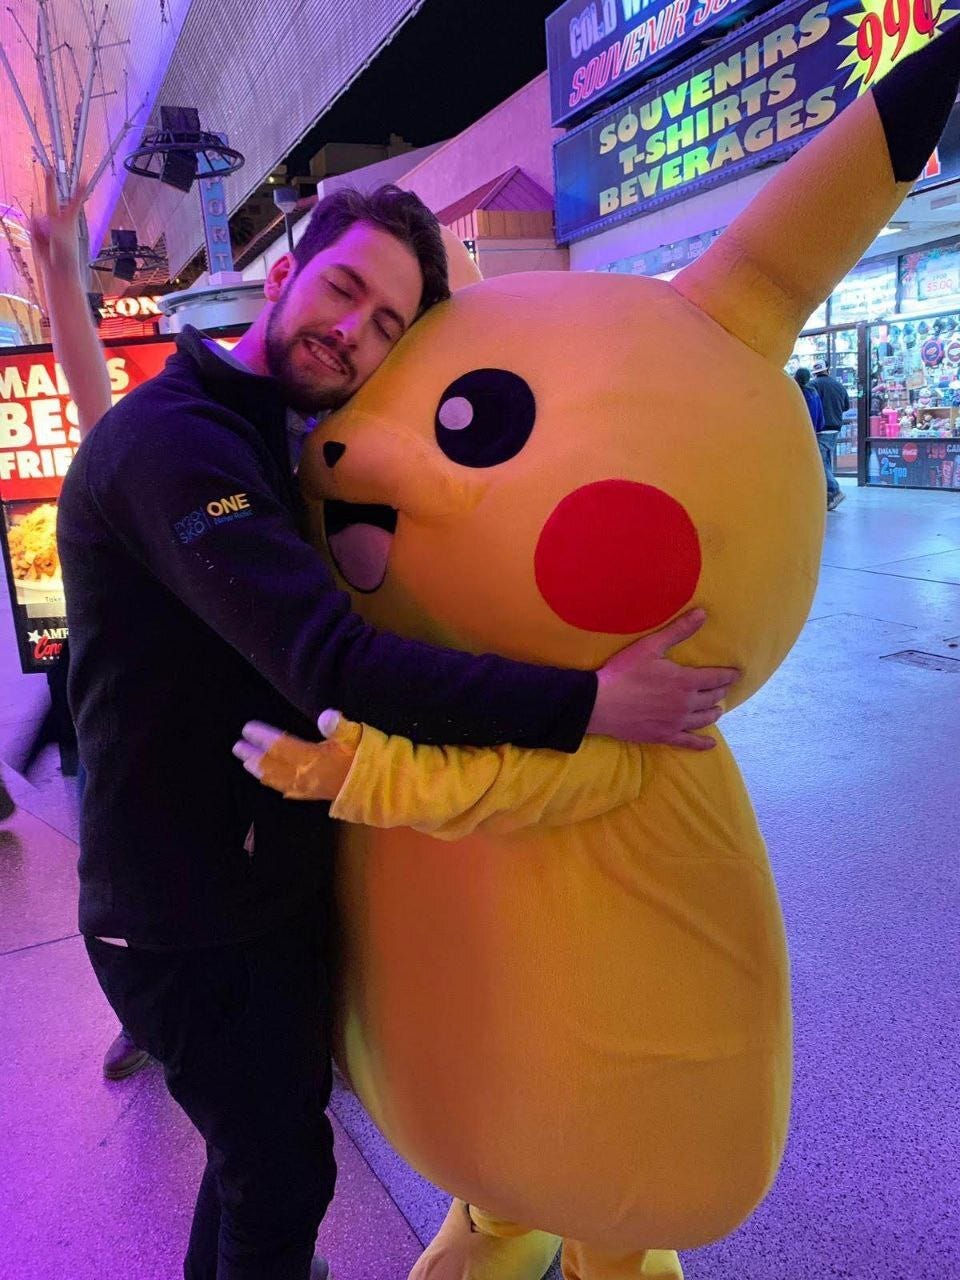 Sean Winters hugging someone dressed as Pikachu from Pokémon, in Las Vegas